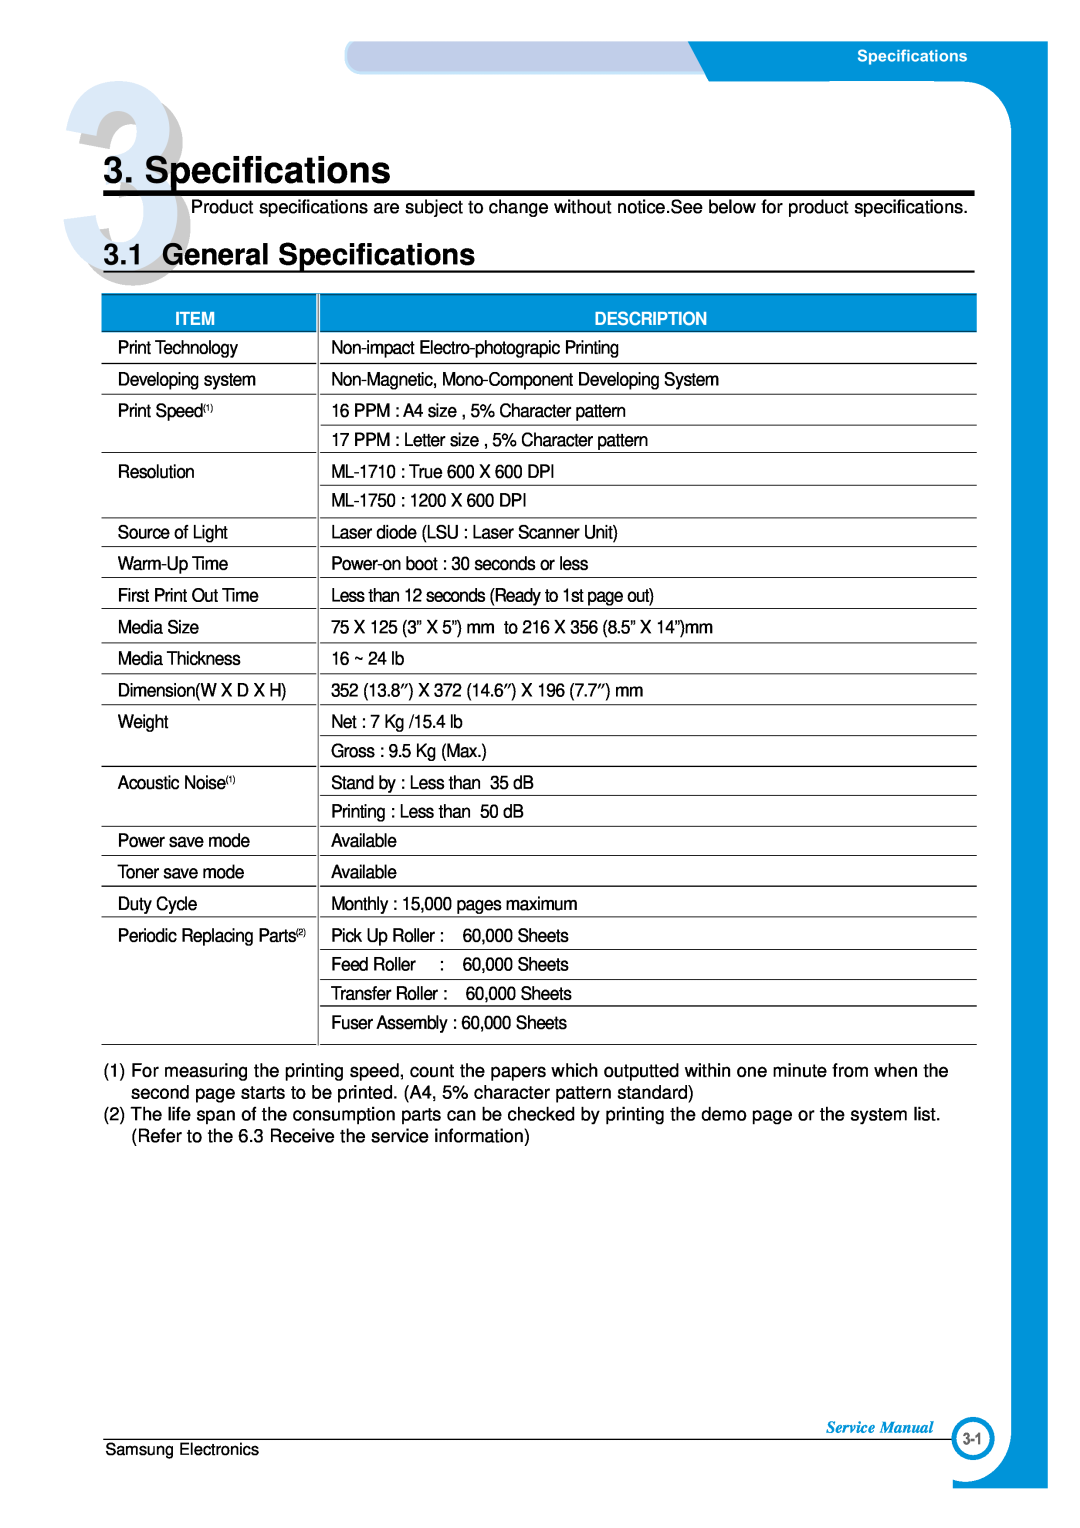 Samsung ML-1700 specifications General Specifications, Description 